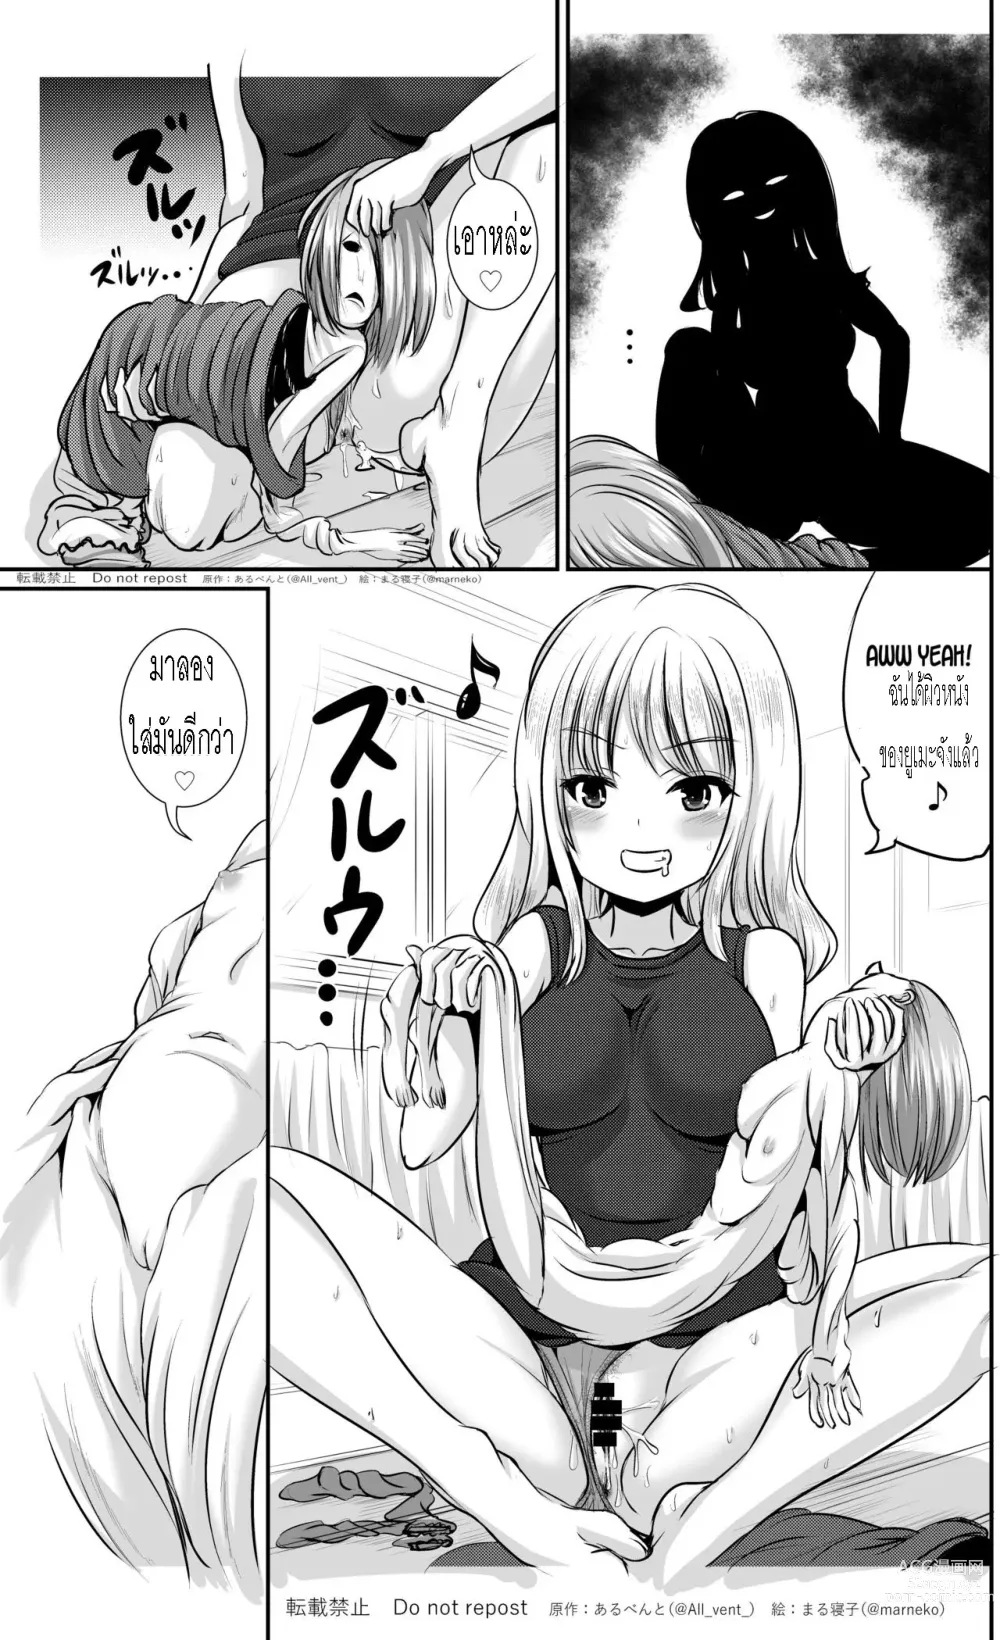 Page 7 of doujinshi Skin Changing Sisters แฝงร่างเป็นพี่สาว